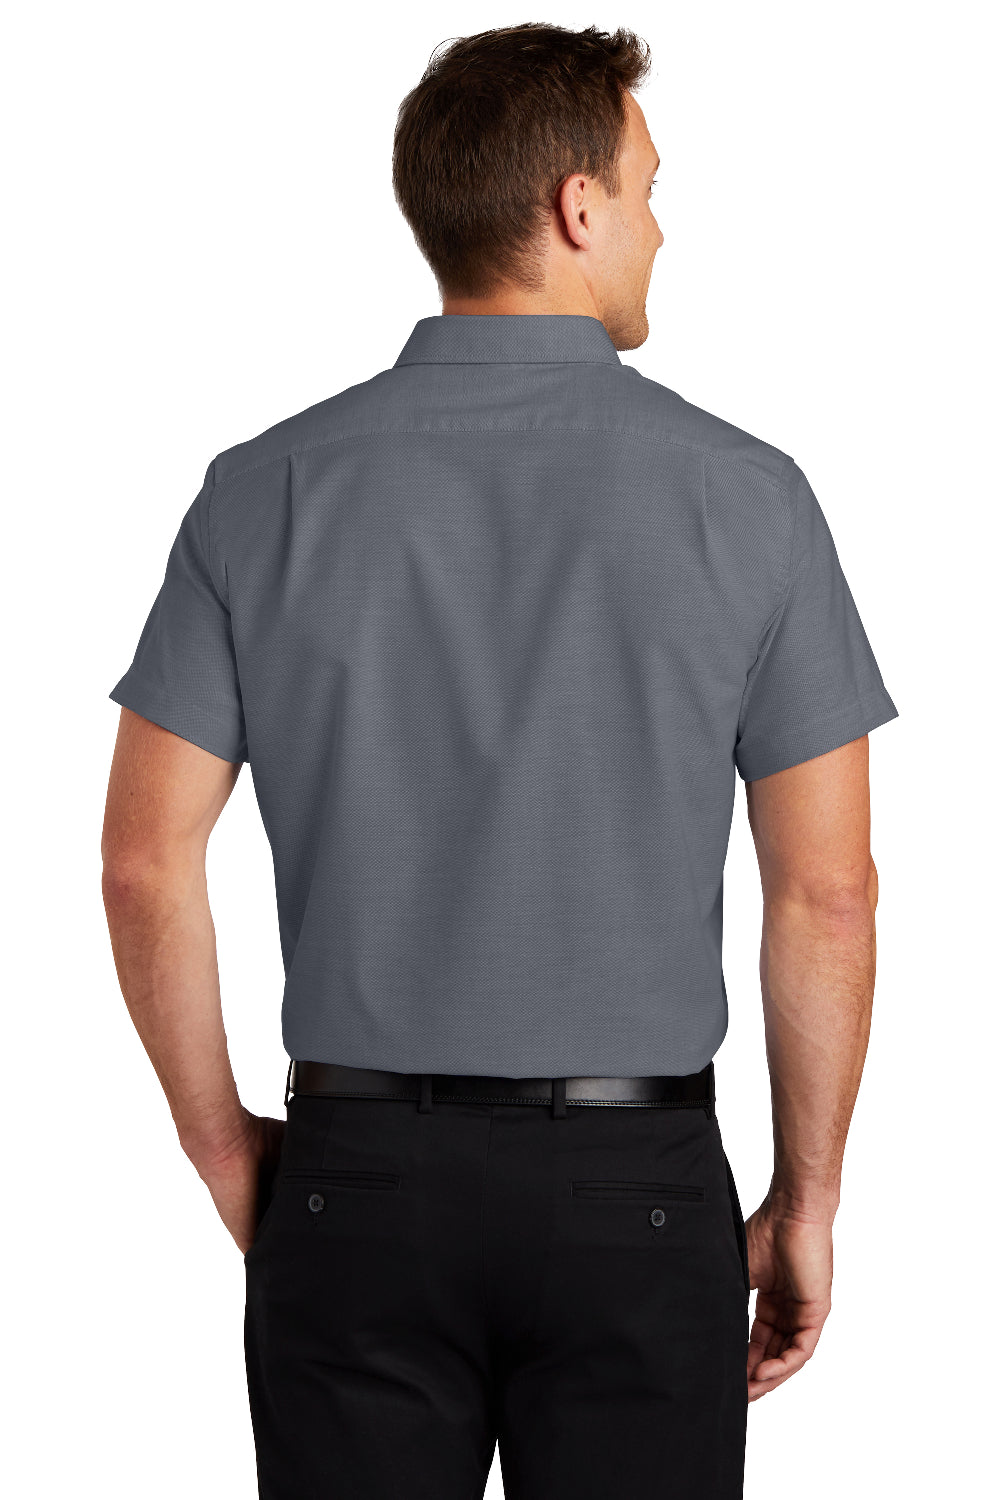 Port Authority S659 Mens SuperPro Oxford Wrinkle Resistant Short Sleeve Button Down Shirt w/ Pocket Black Back